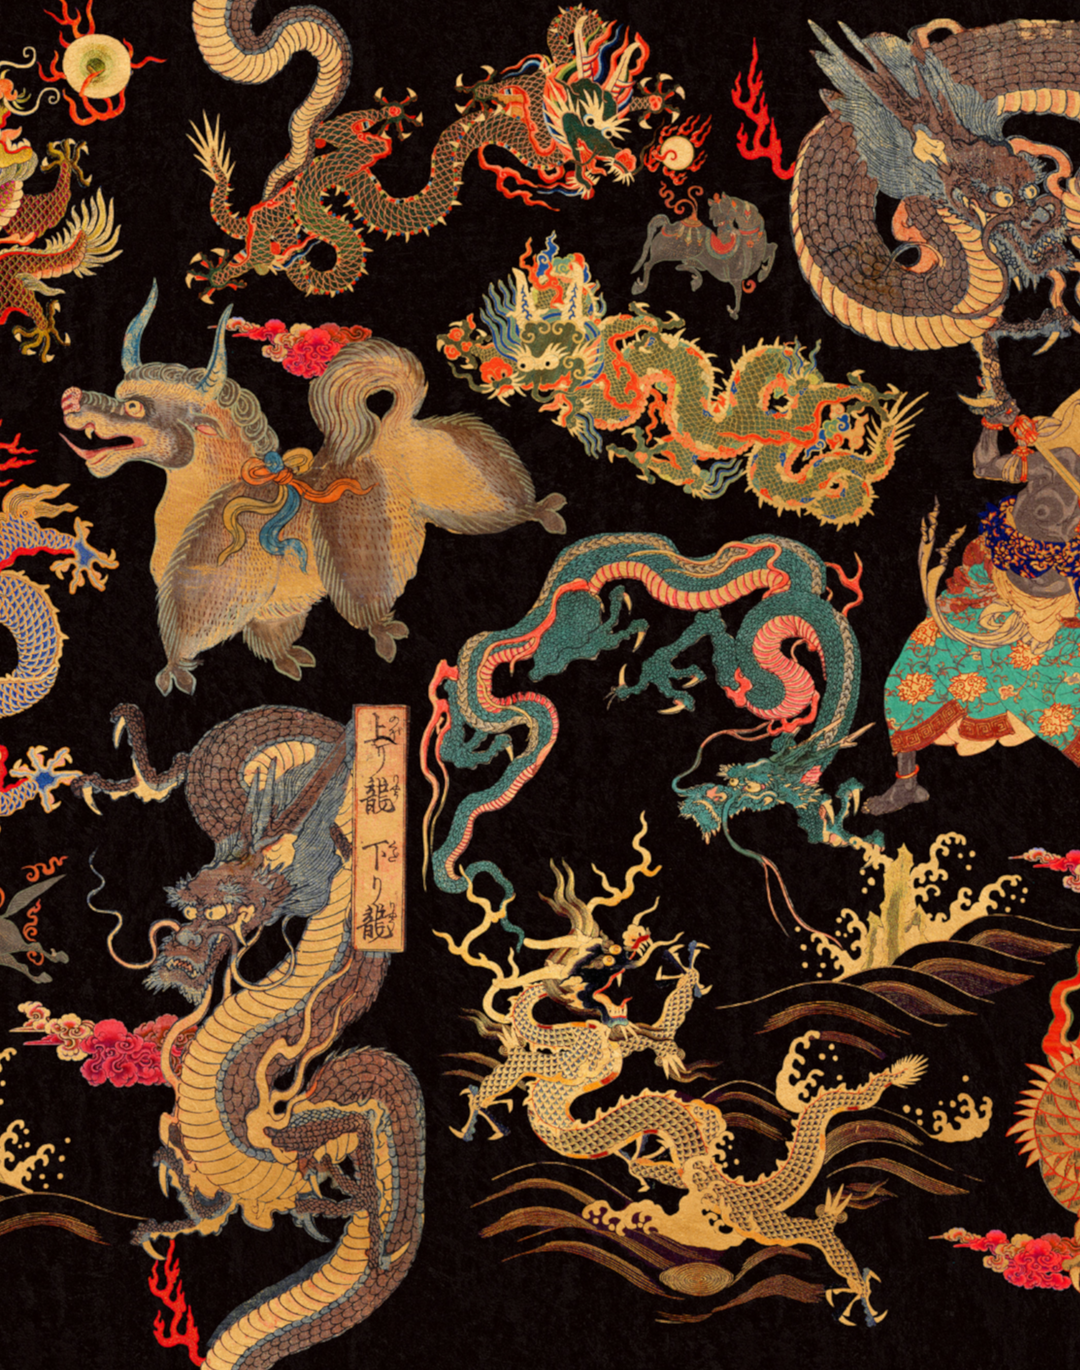 Dragons of Tibet